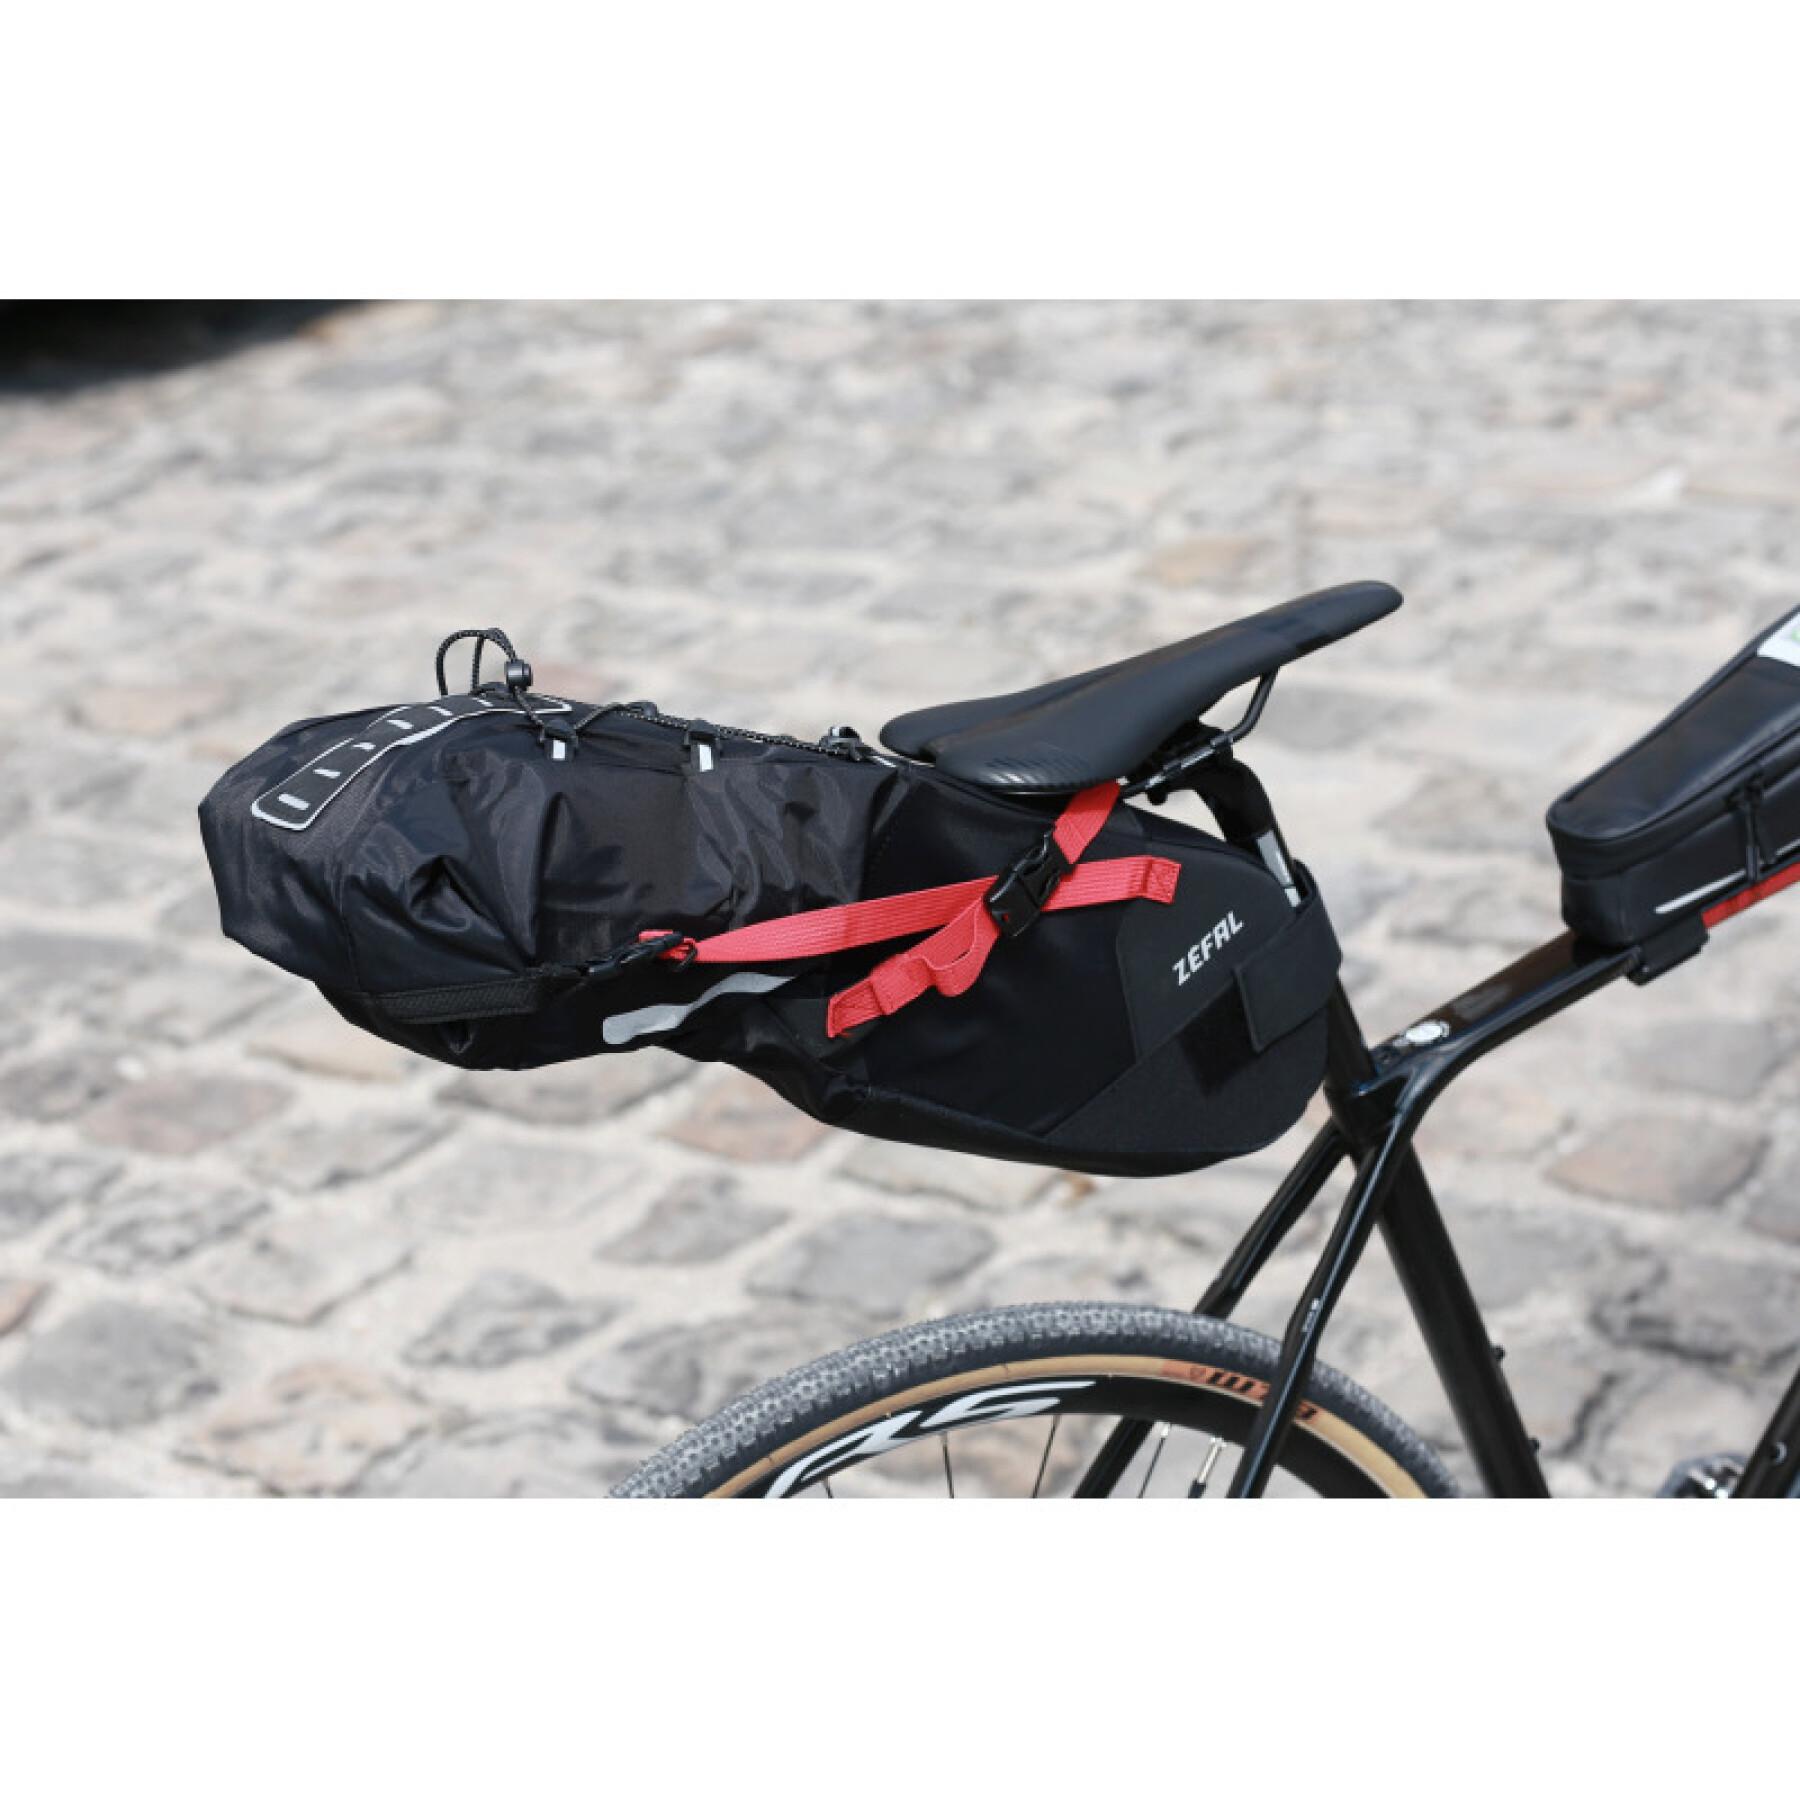 Bolsa impermeable para el sillín de la bicicleta Zefal Z adventure r17